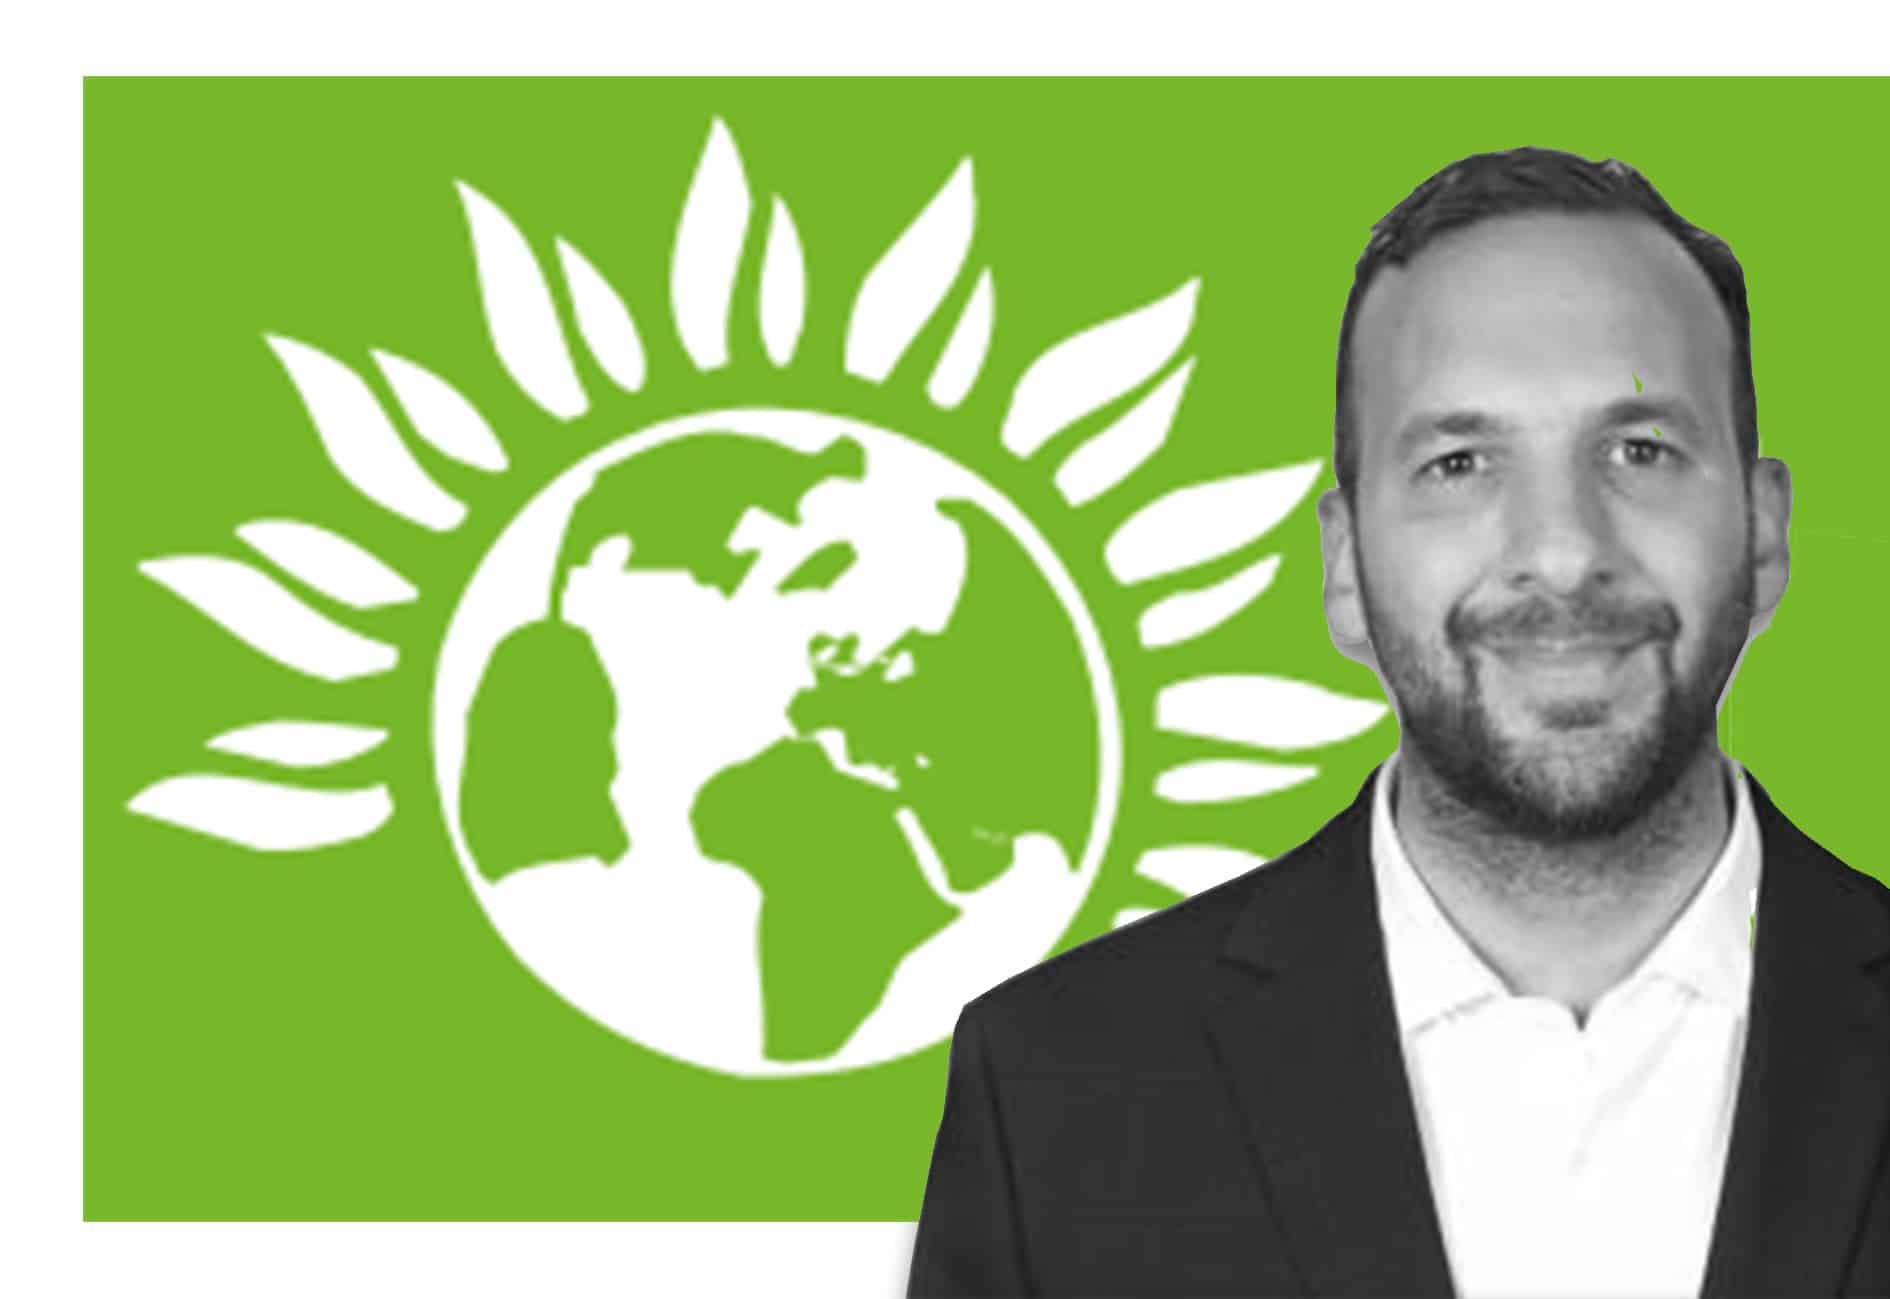 Voting Green will ‘send a clear message to Sir Keir Starmer’ – Zack Polanski